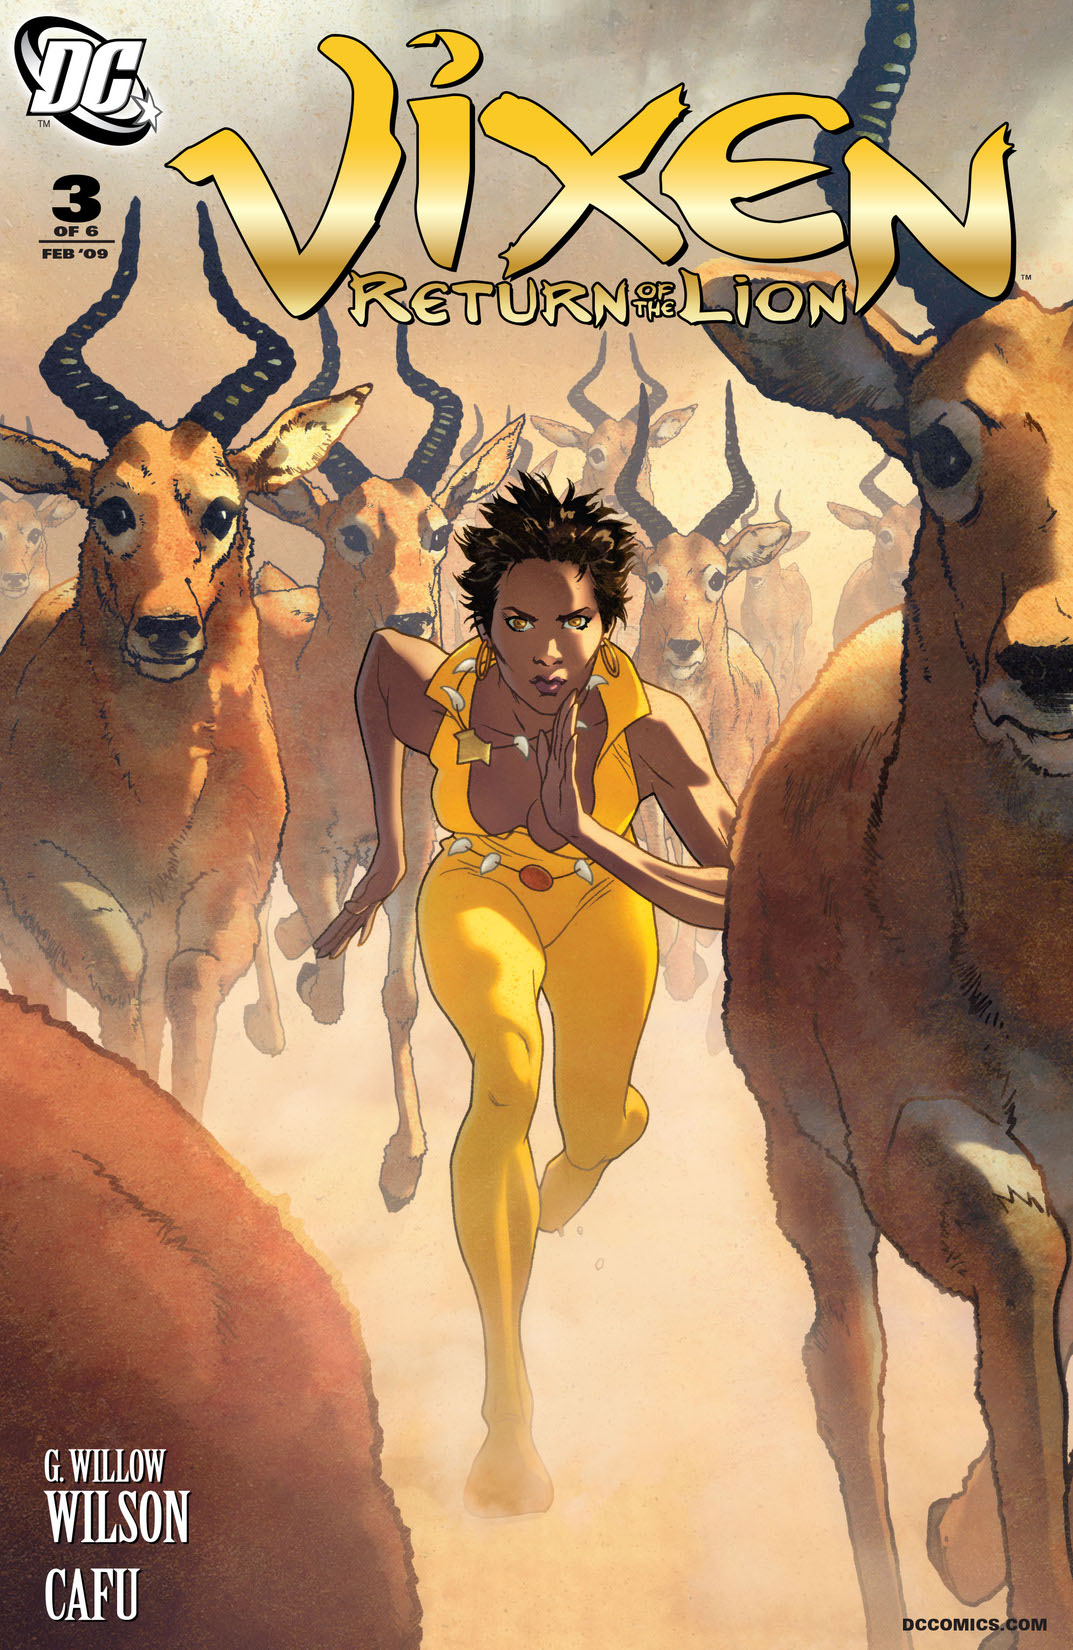 Vixen: Return of the Lion #3 preview images